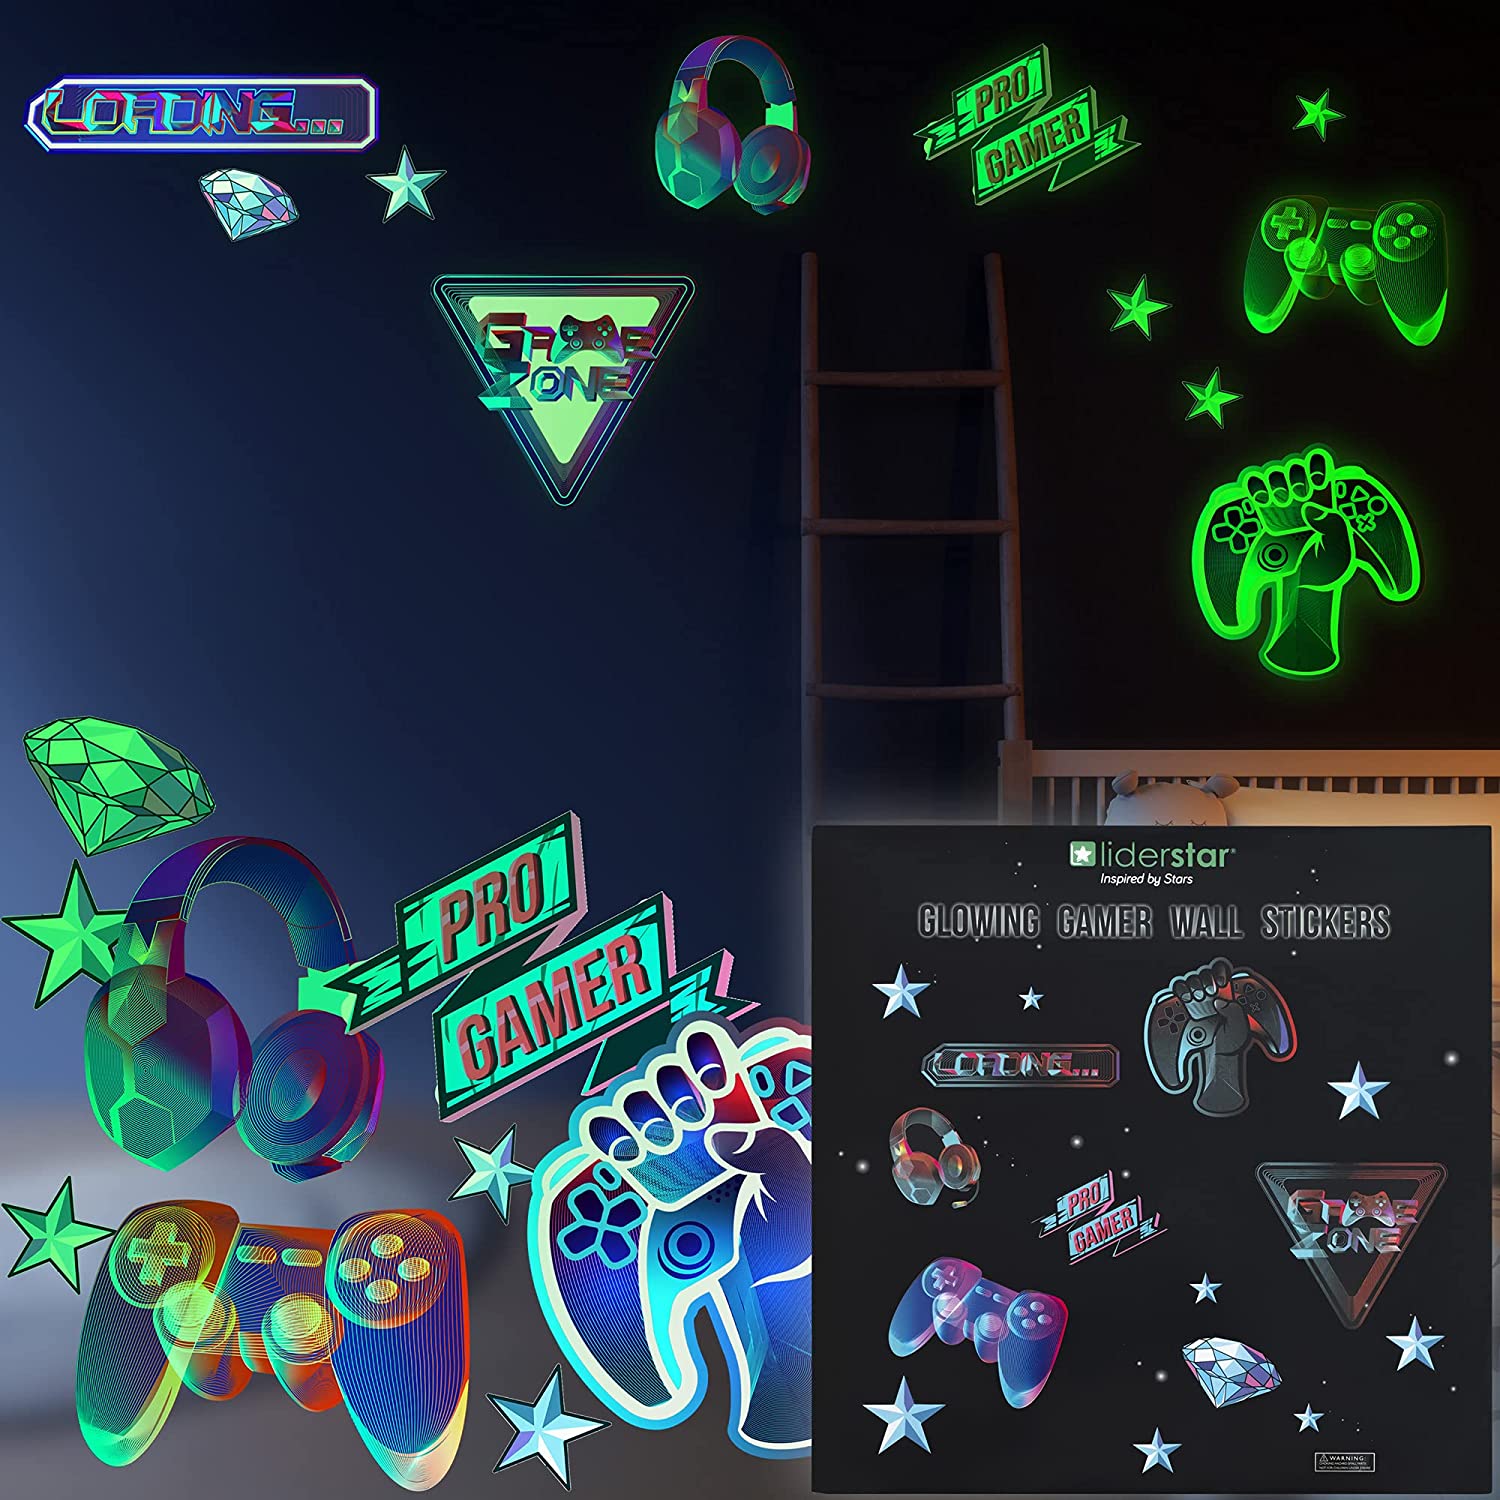 Glow in the Dark Gamer Wall Stickers